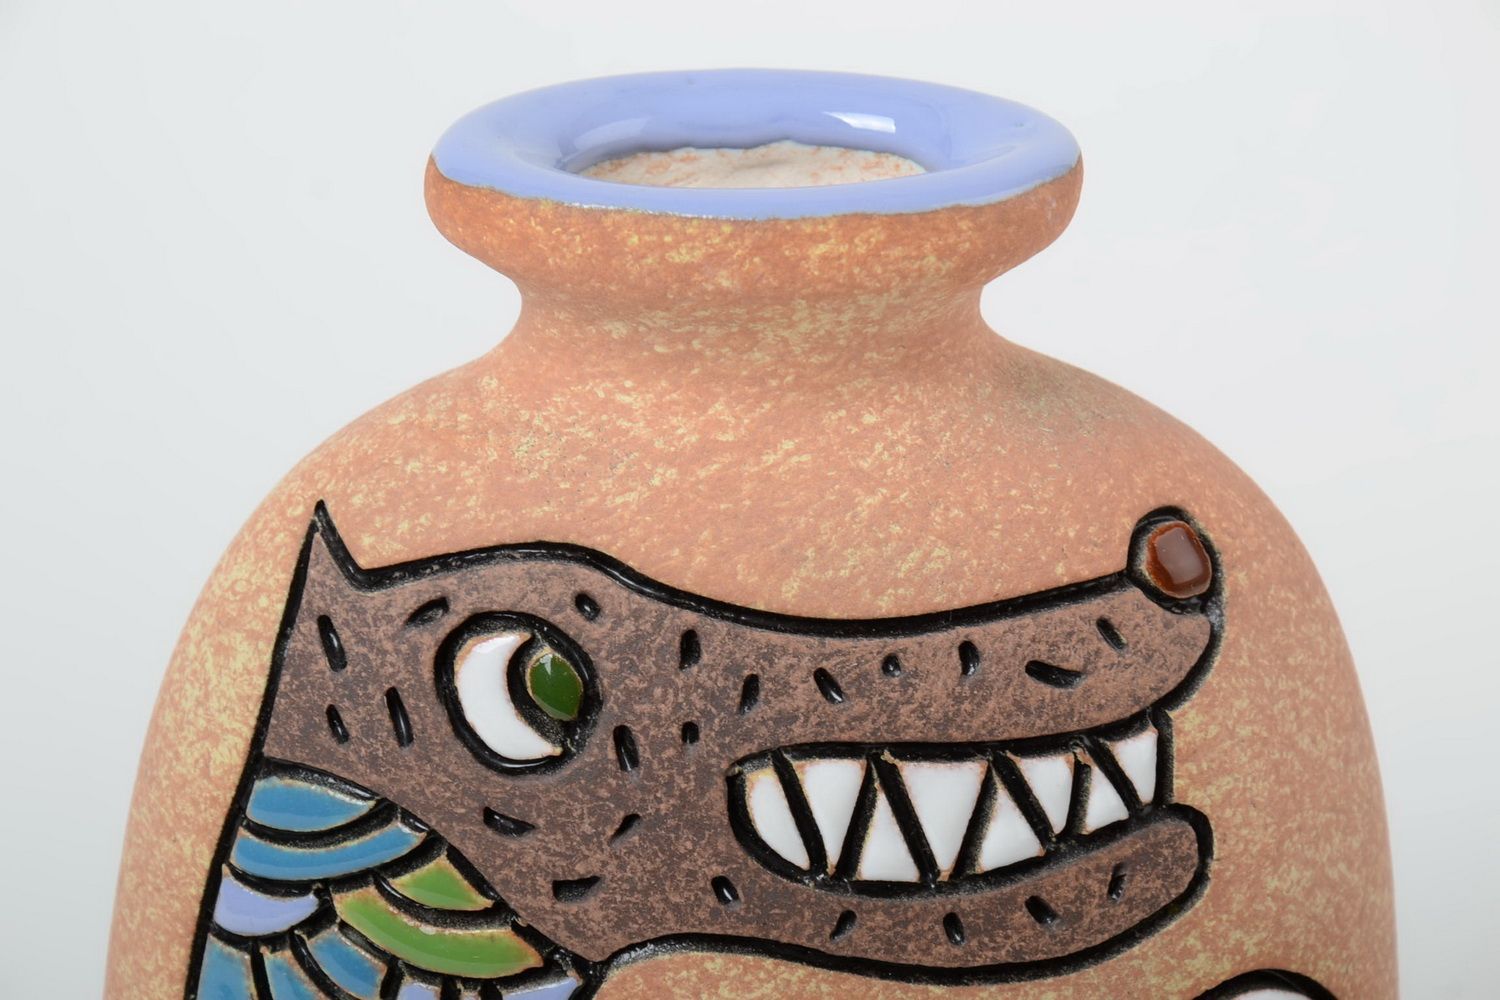 Cat, dog, chick picture ceramic handmade decor vase 30 oz, 9 inches, 0,68 lb photo 4